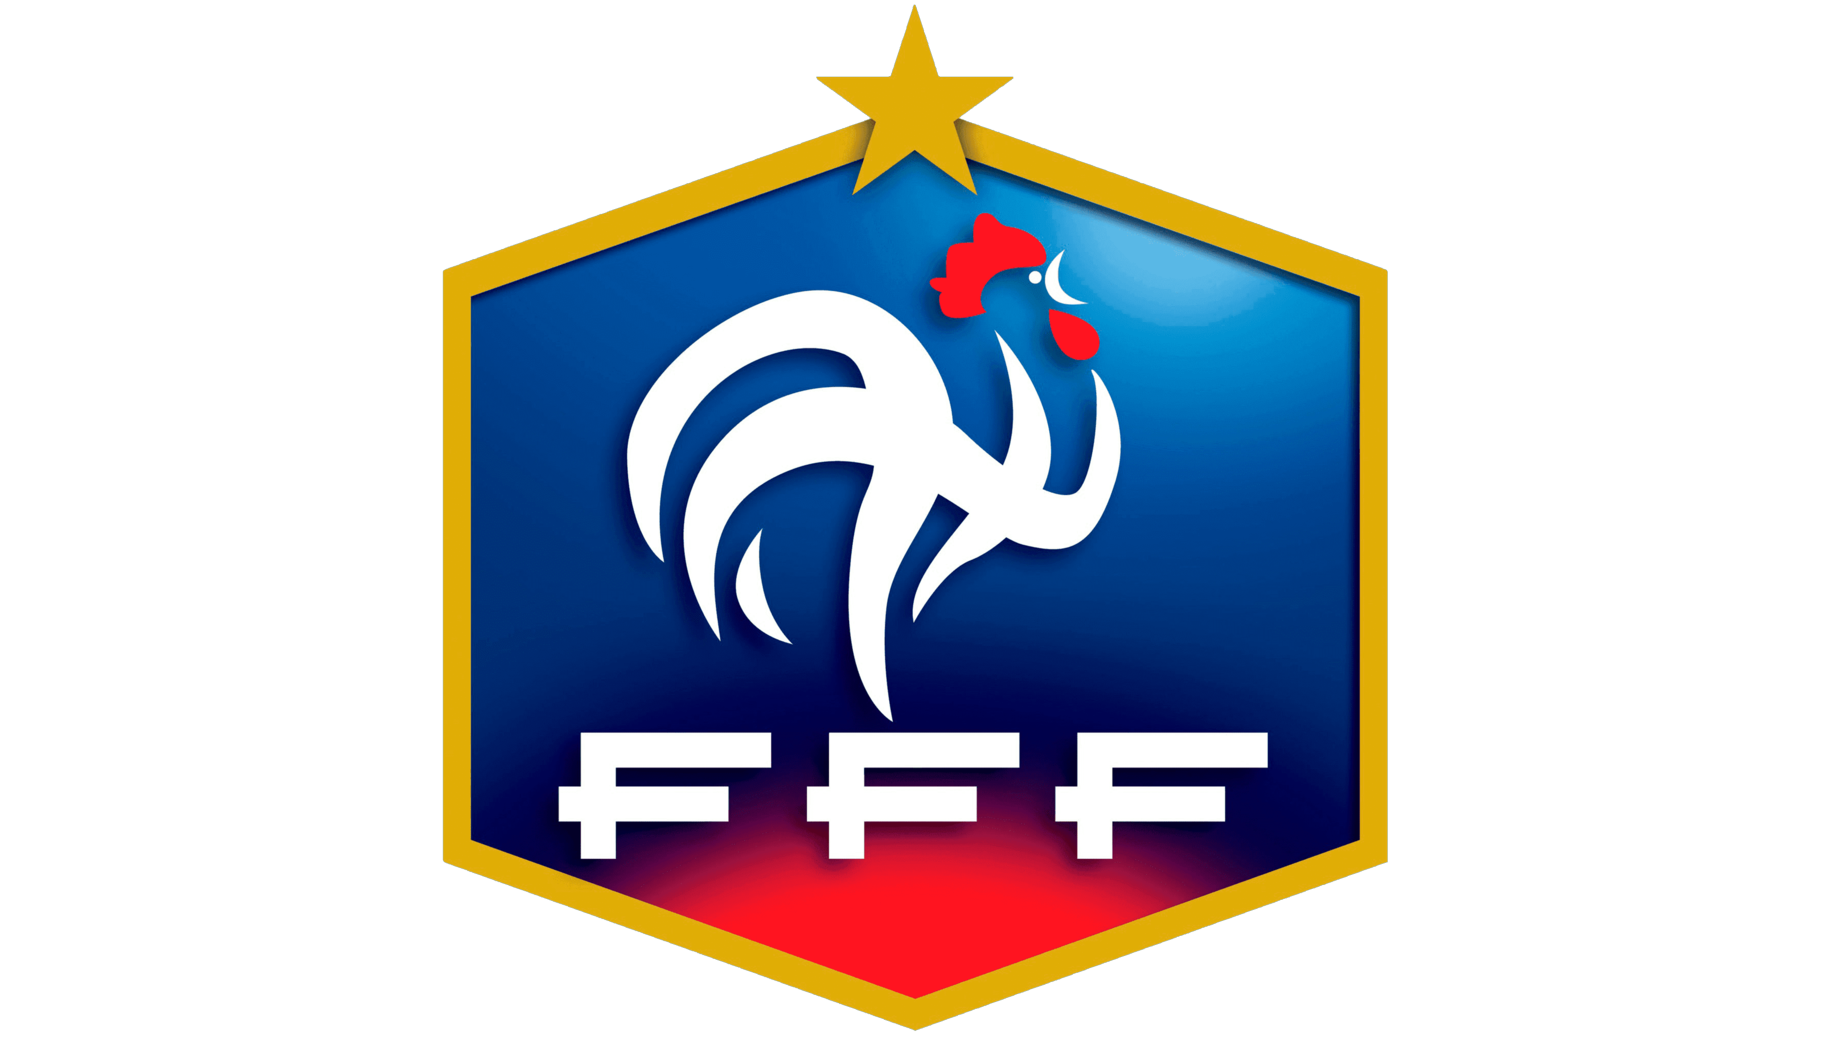 Equipe nationalle de france logo